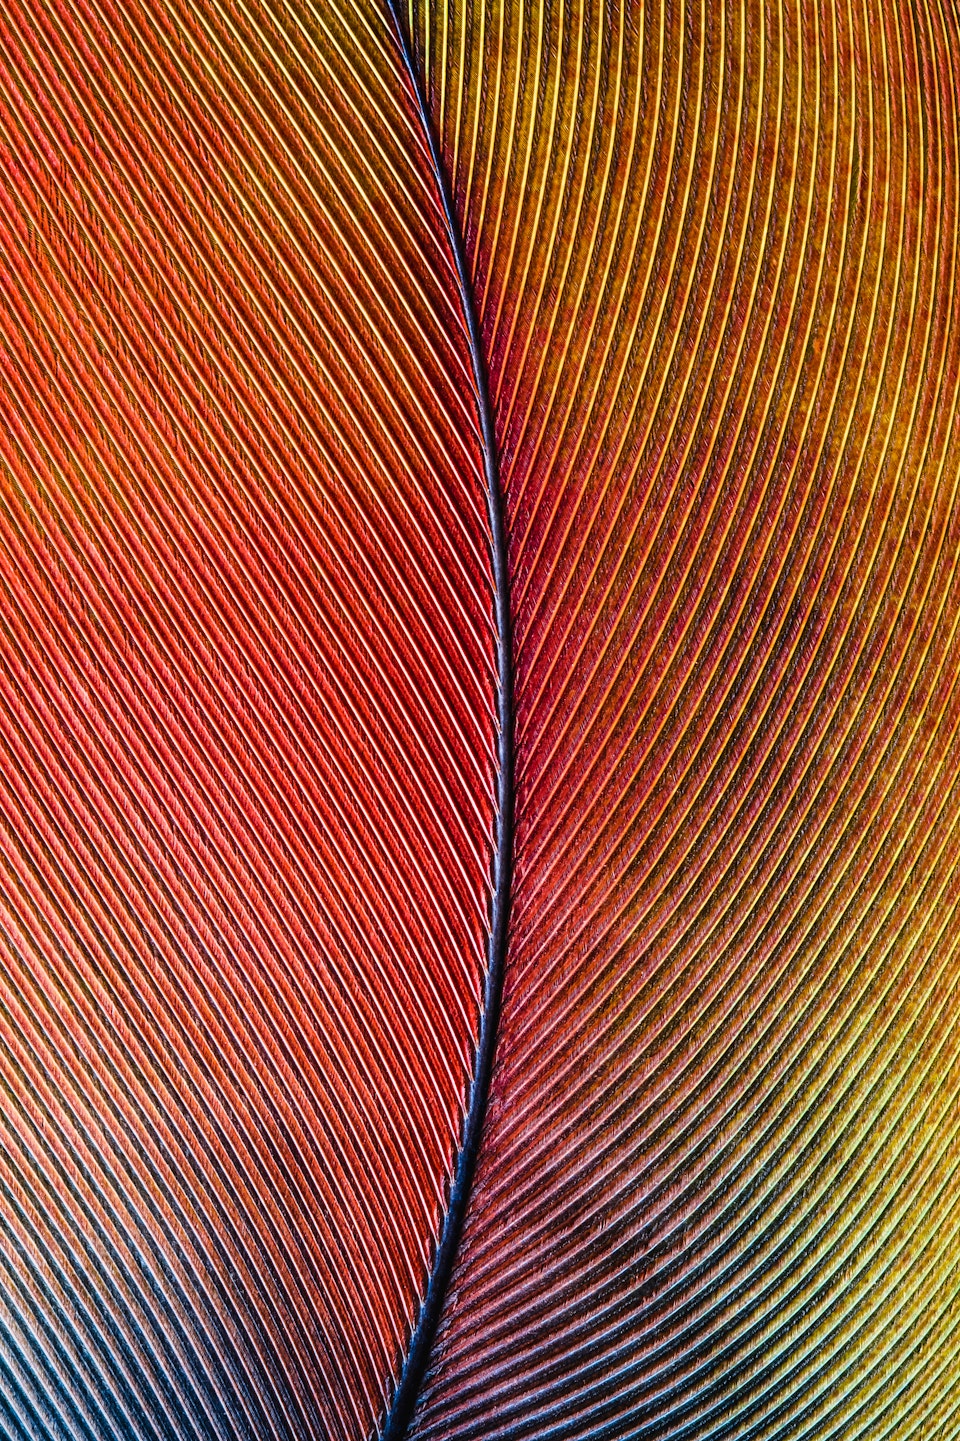 Penas Nativas / Native Feathers